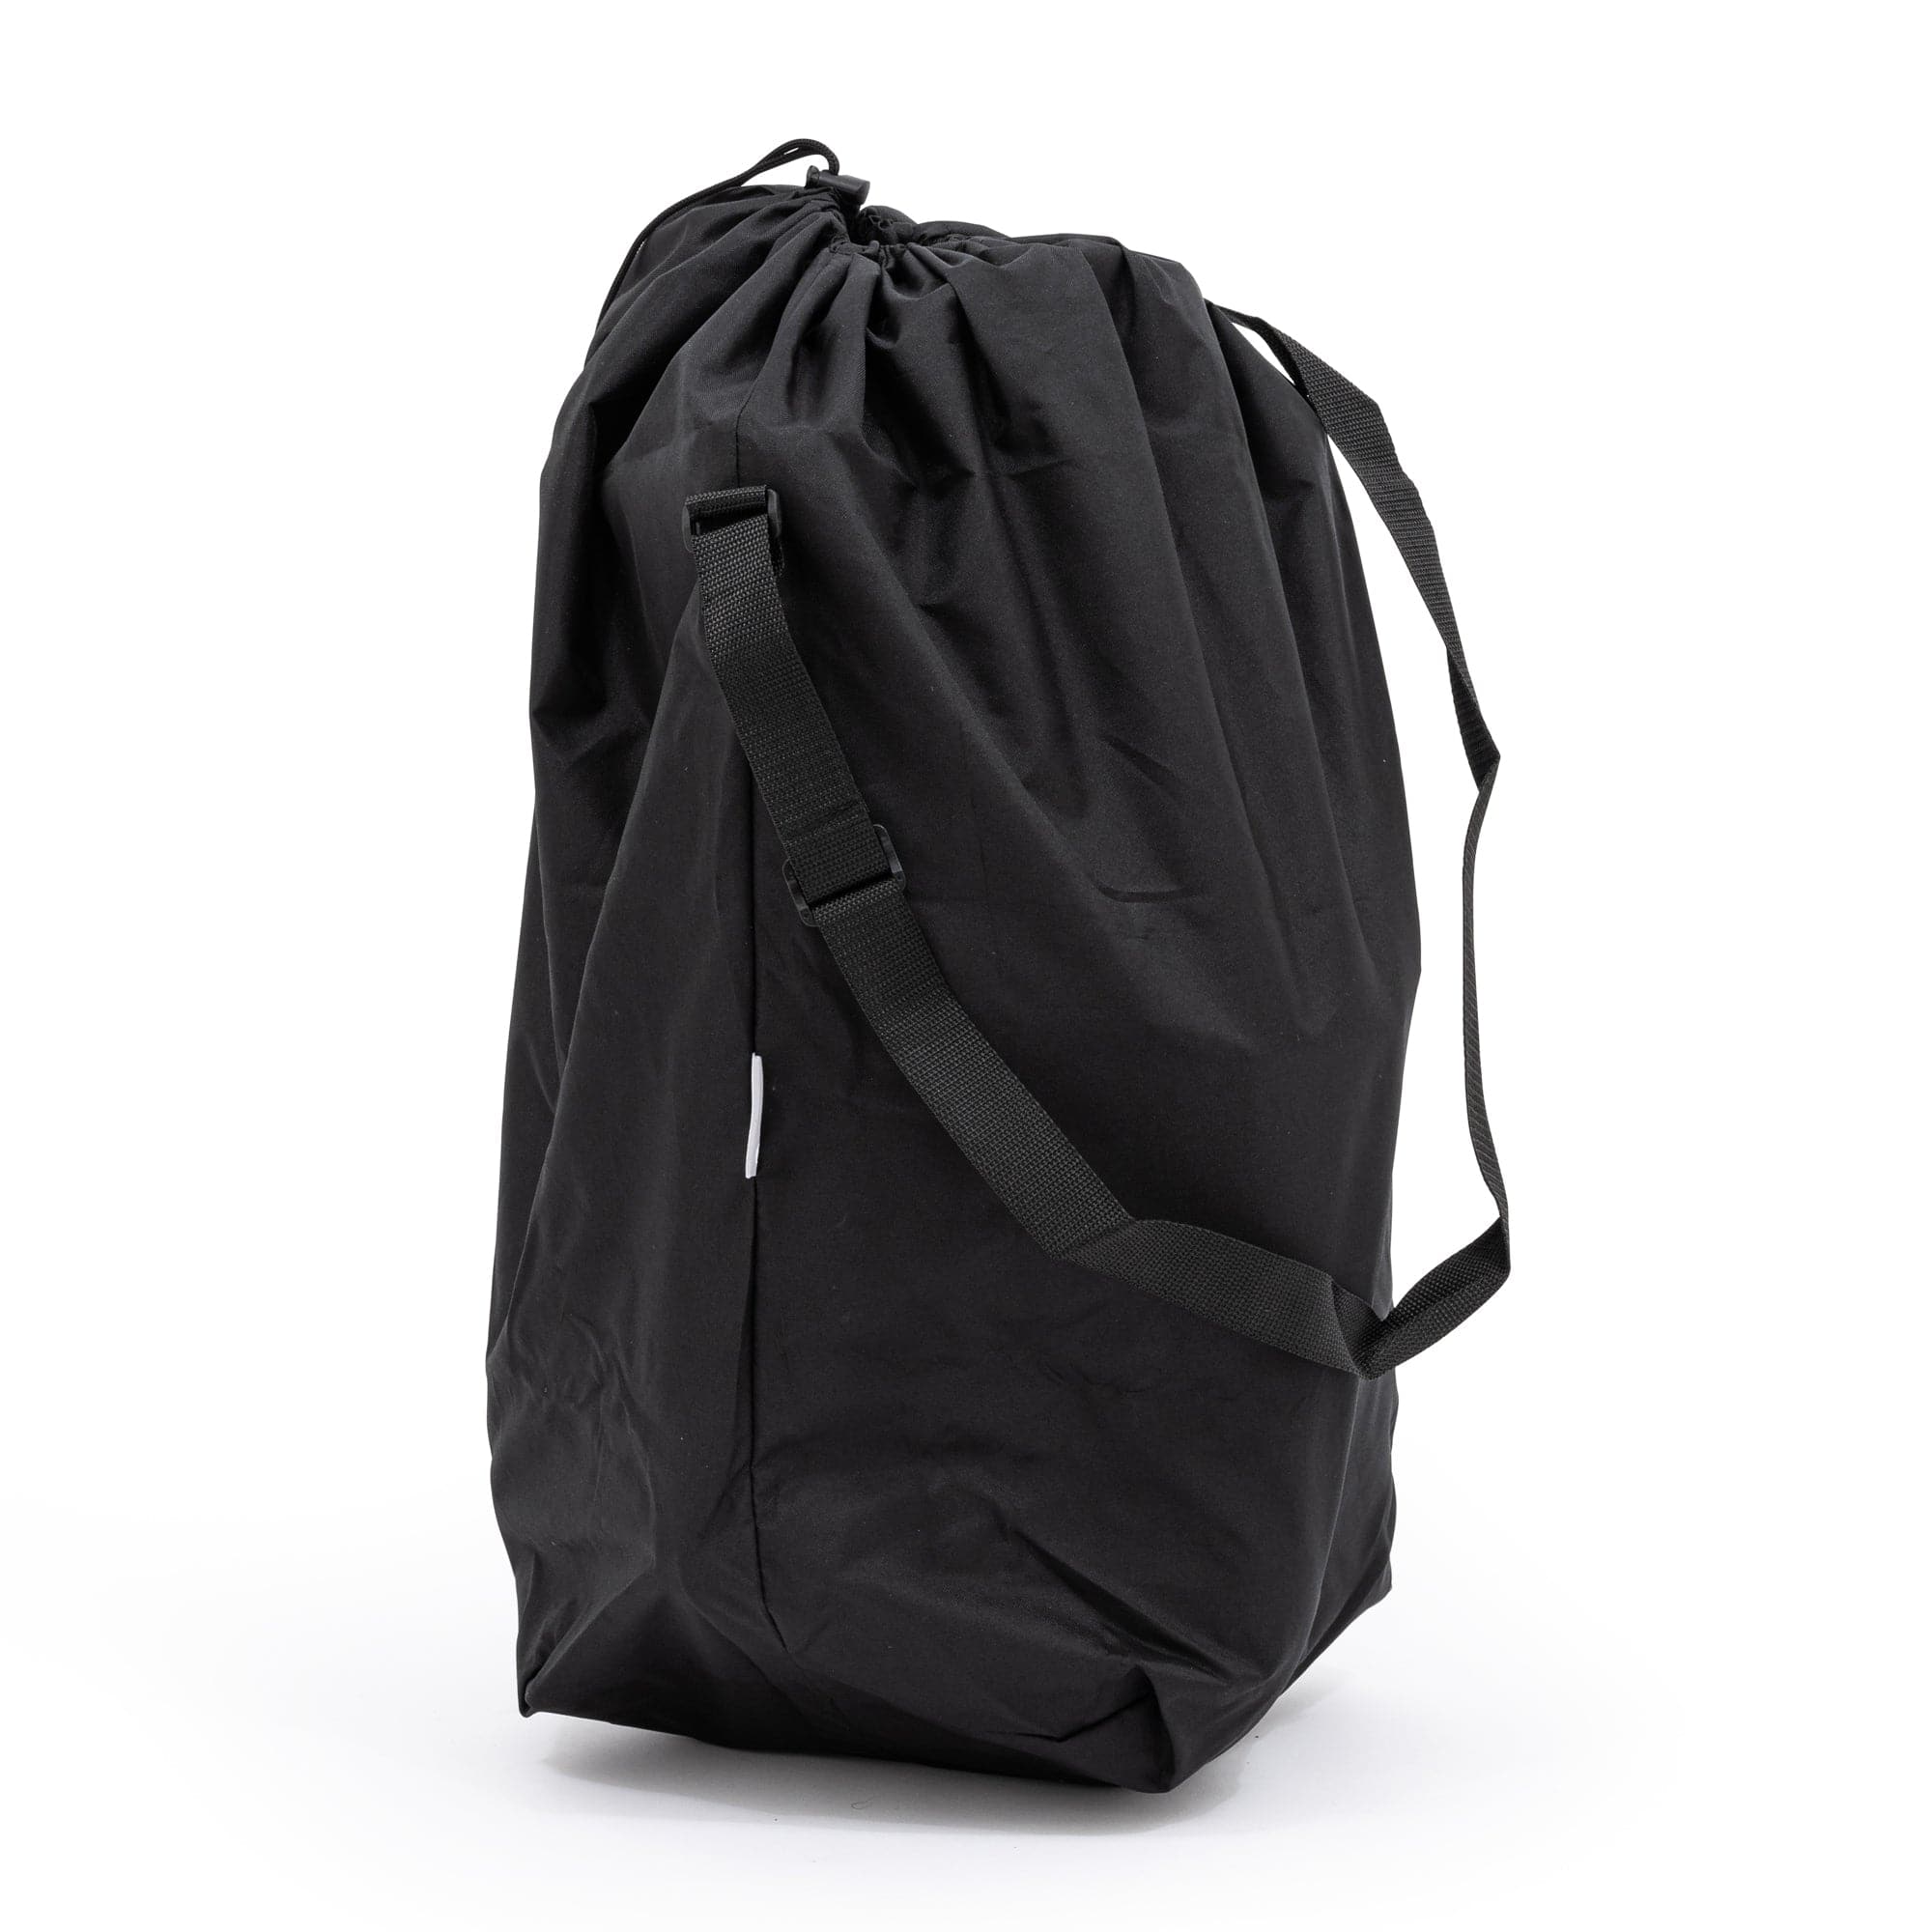 Foryourlittleone Xplor Trike - Travel Bag - For Your Little One